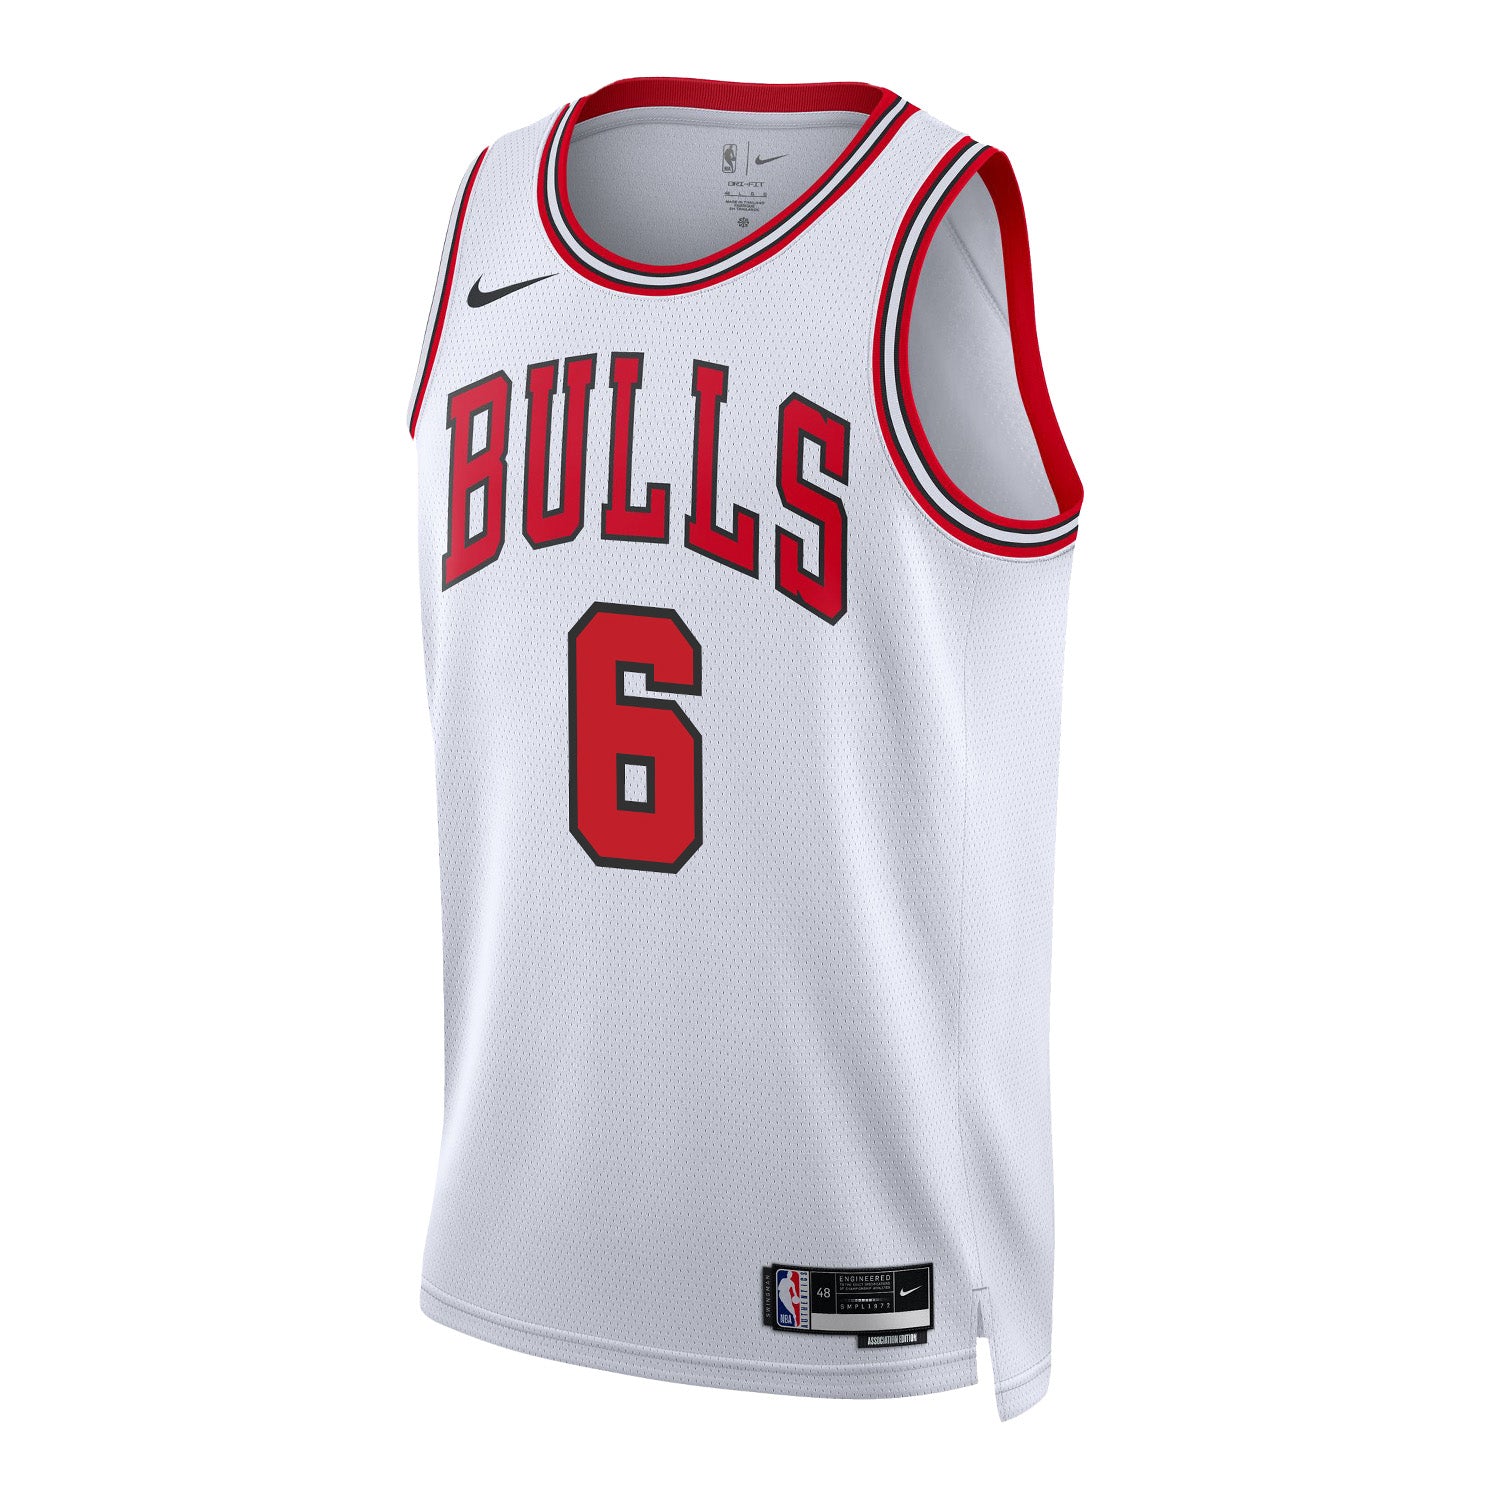 Alex Caruso Jersey - NBA Chicago Bulls Alex Caruso Jerseys - Bulls